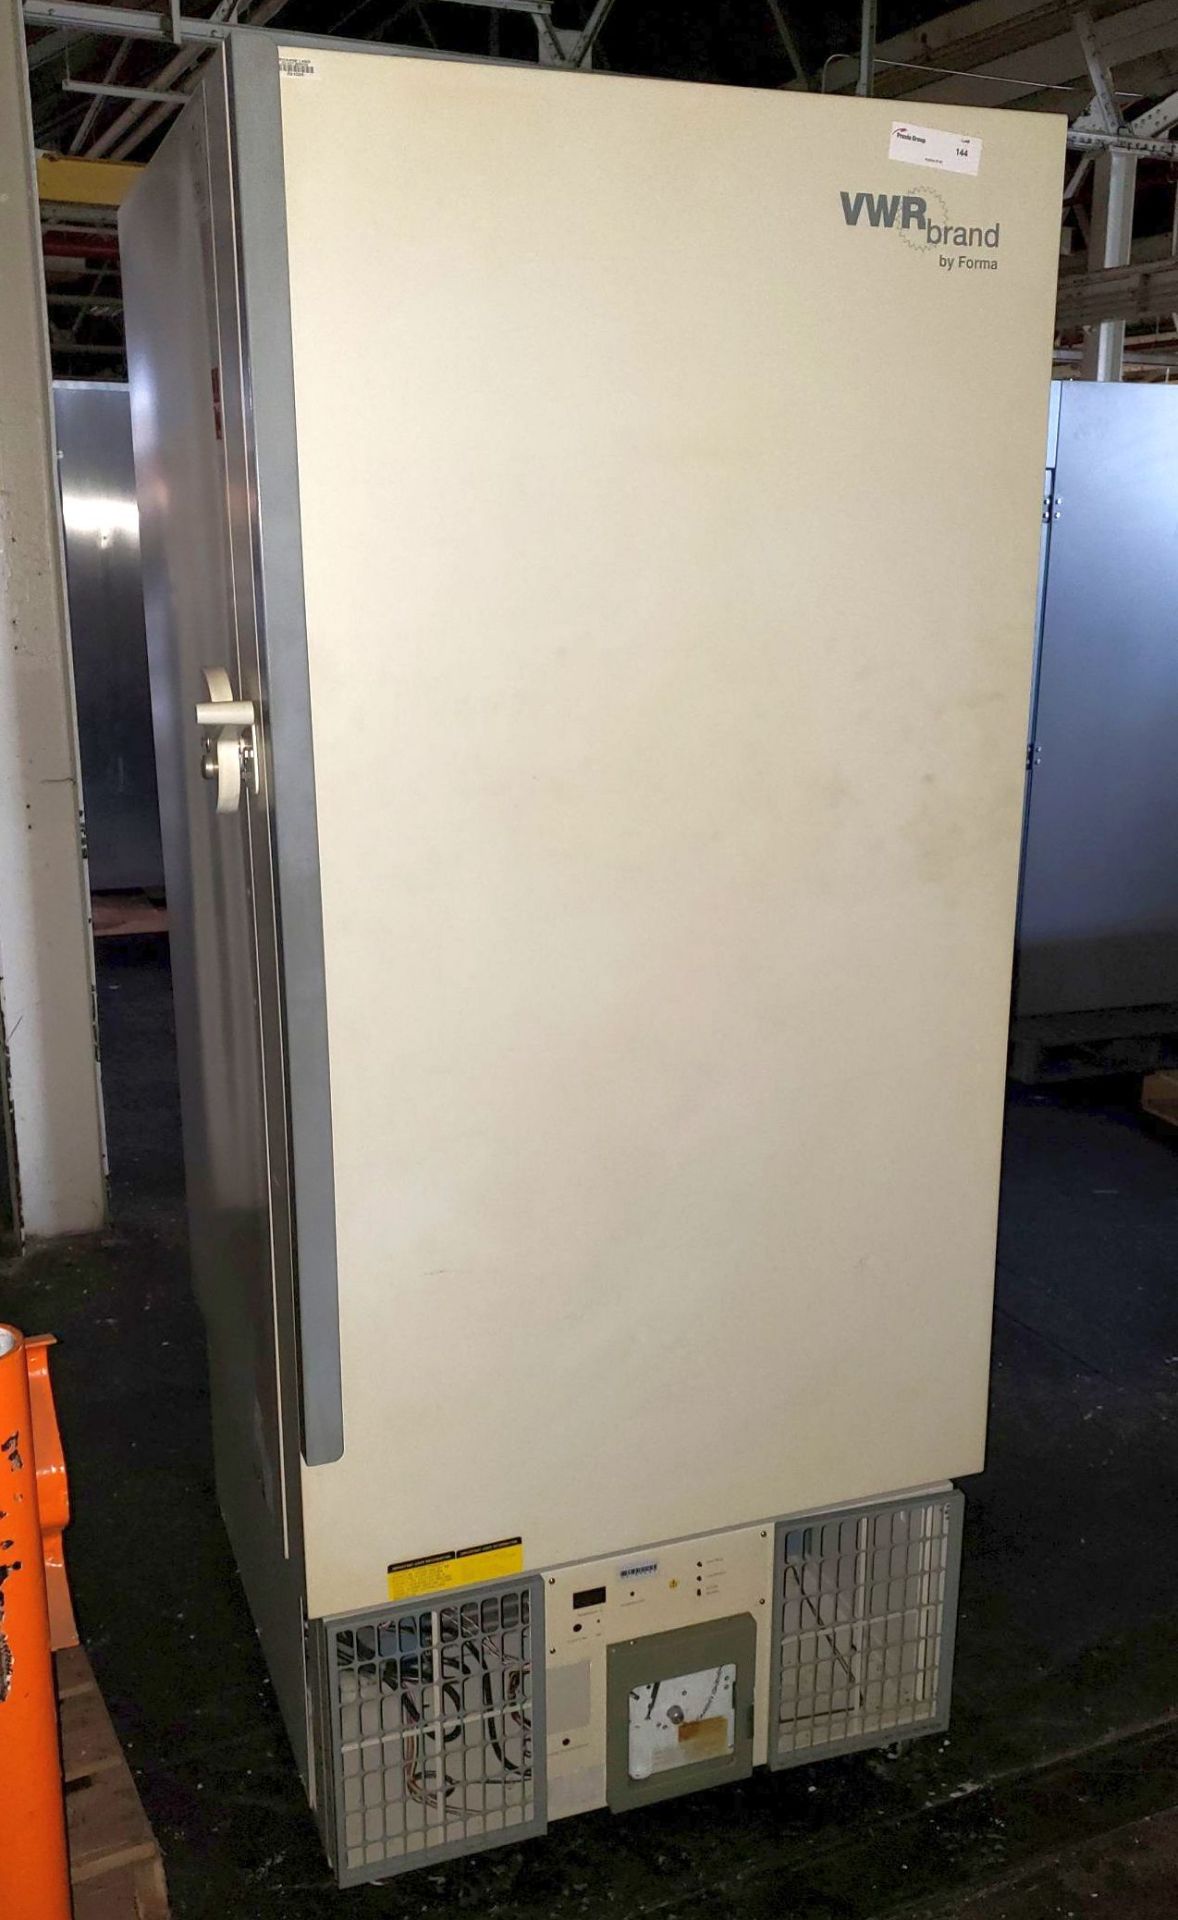 VWR brand Forma Scientific freezer, model 5443, approximately 23" wide x 26" deep x 51" tall